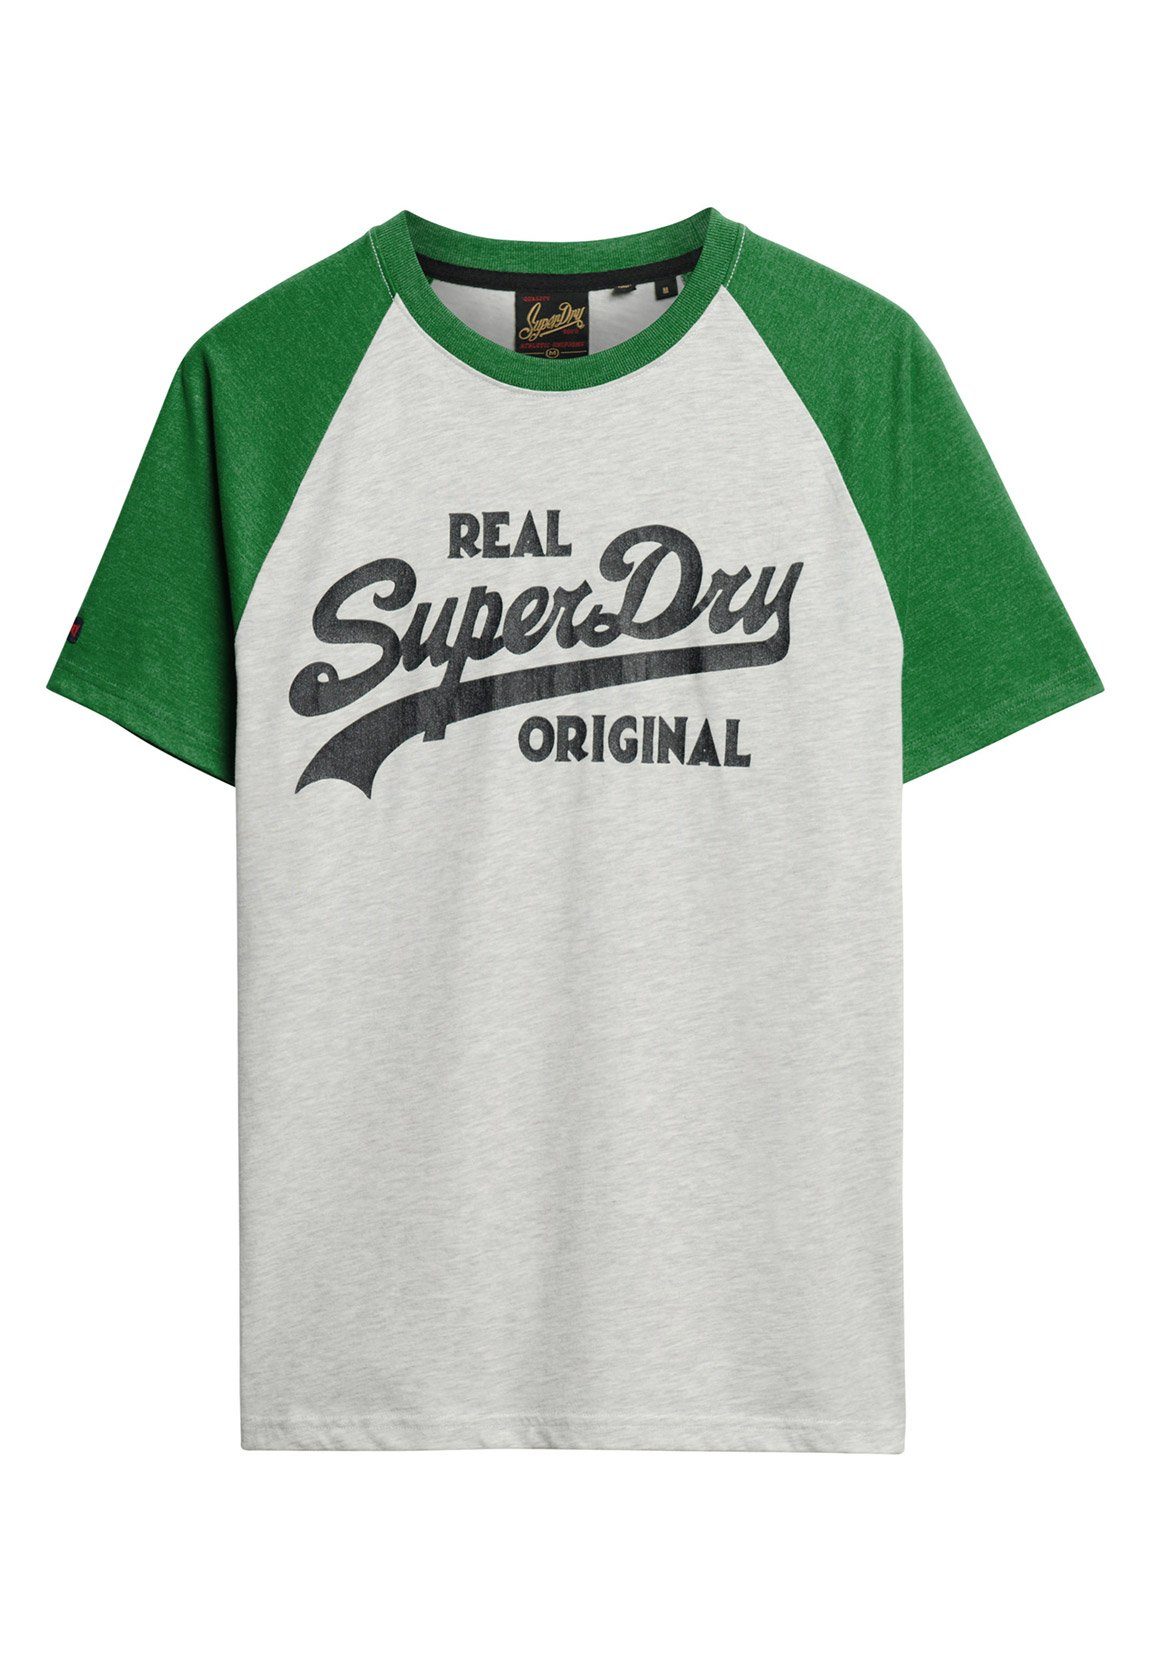 RAGLAN Glacier TEE VL Superdry T-Shirt T-Shirt Superdry ATHLETIC Marl Herren Grey